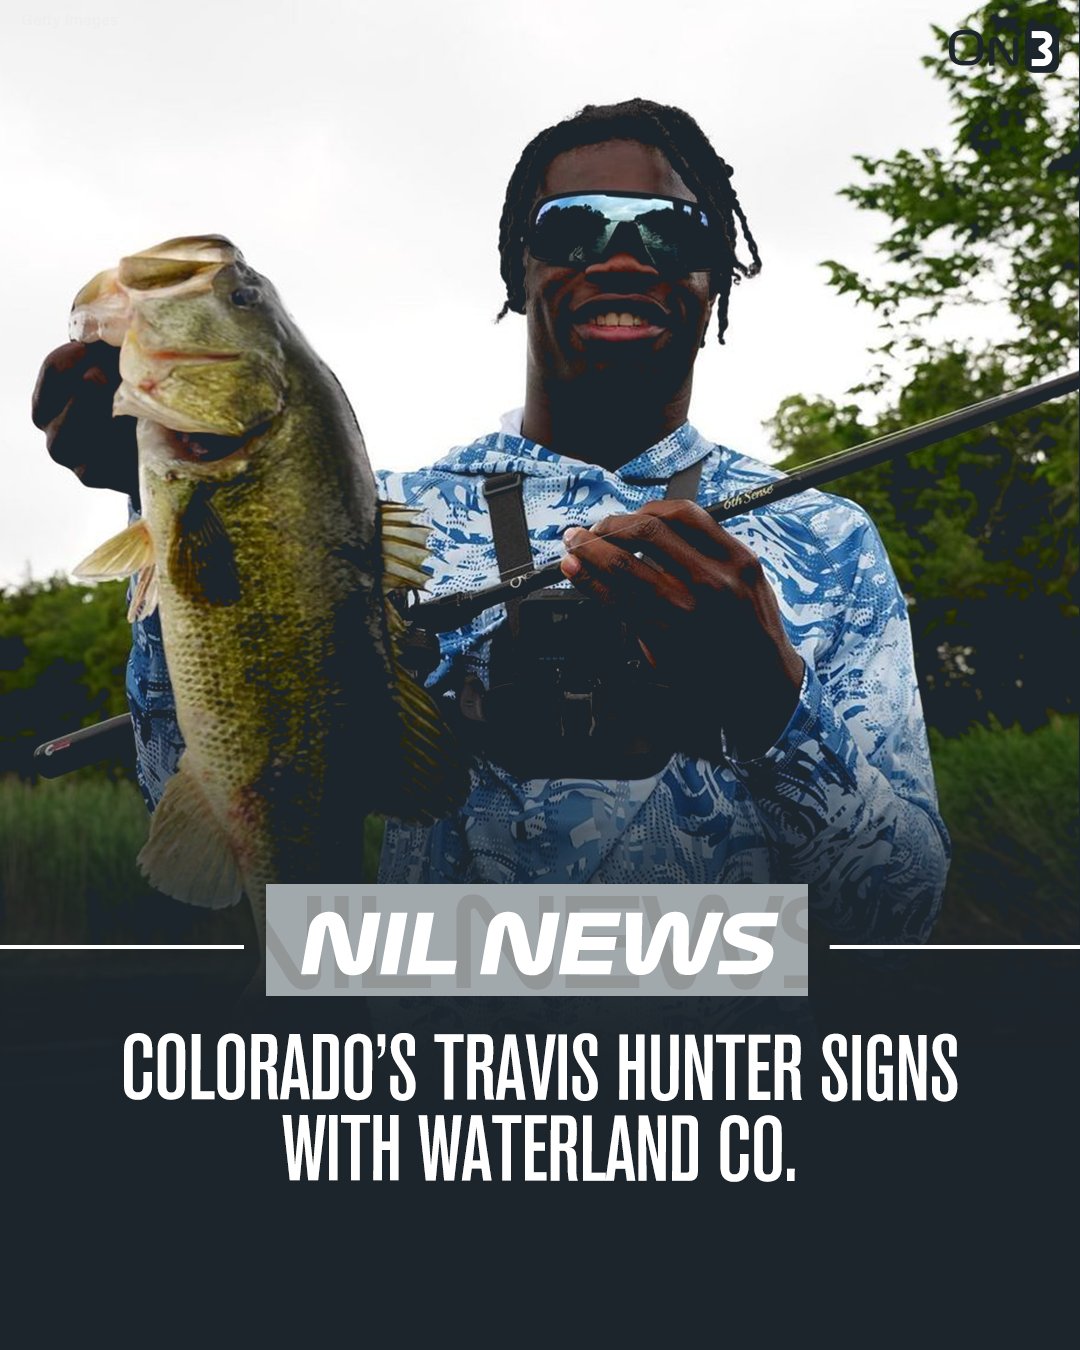 On3 NIL on X: Colorado star Travis Hunter has added an NIL deal